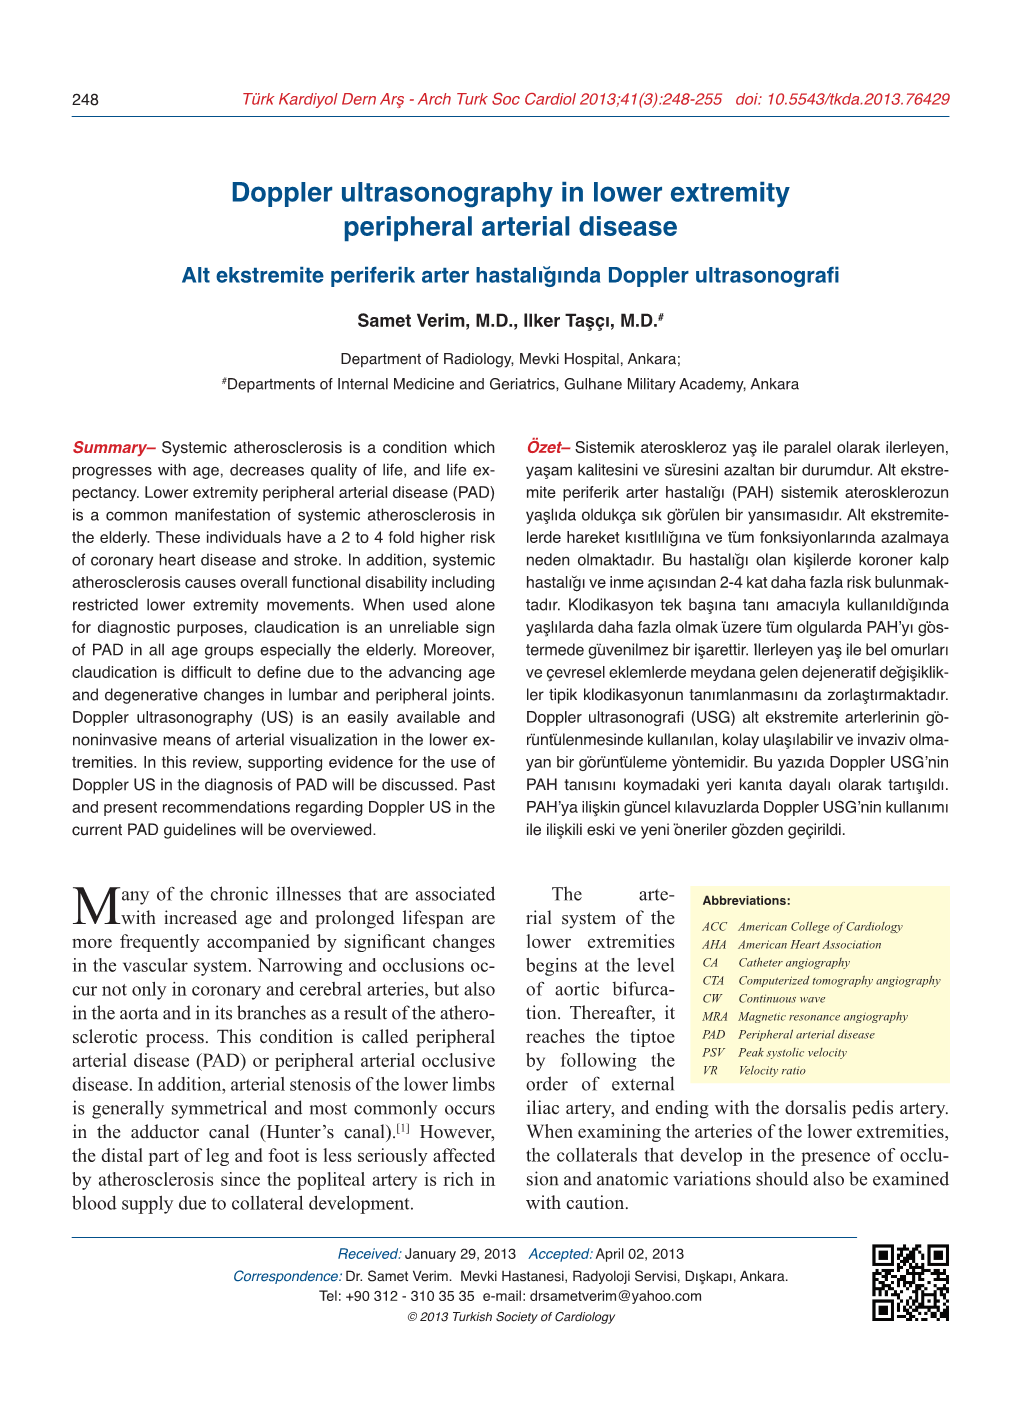 Doppler Ultrasonography in Lower Extremity Peripheral Arterial Disease